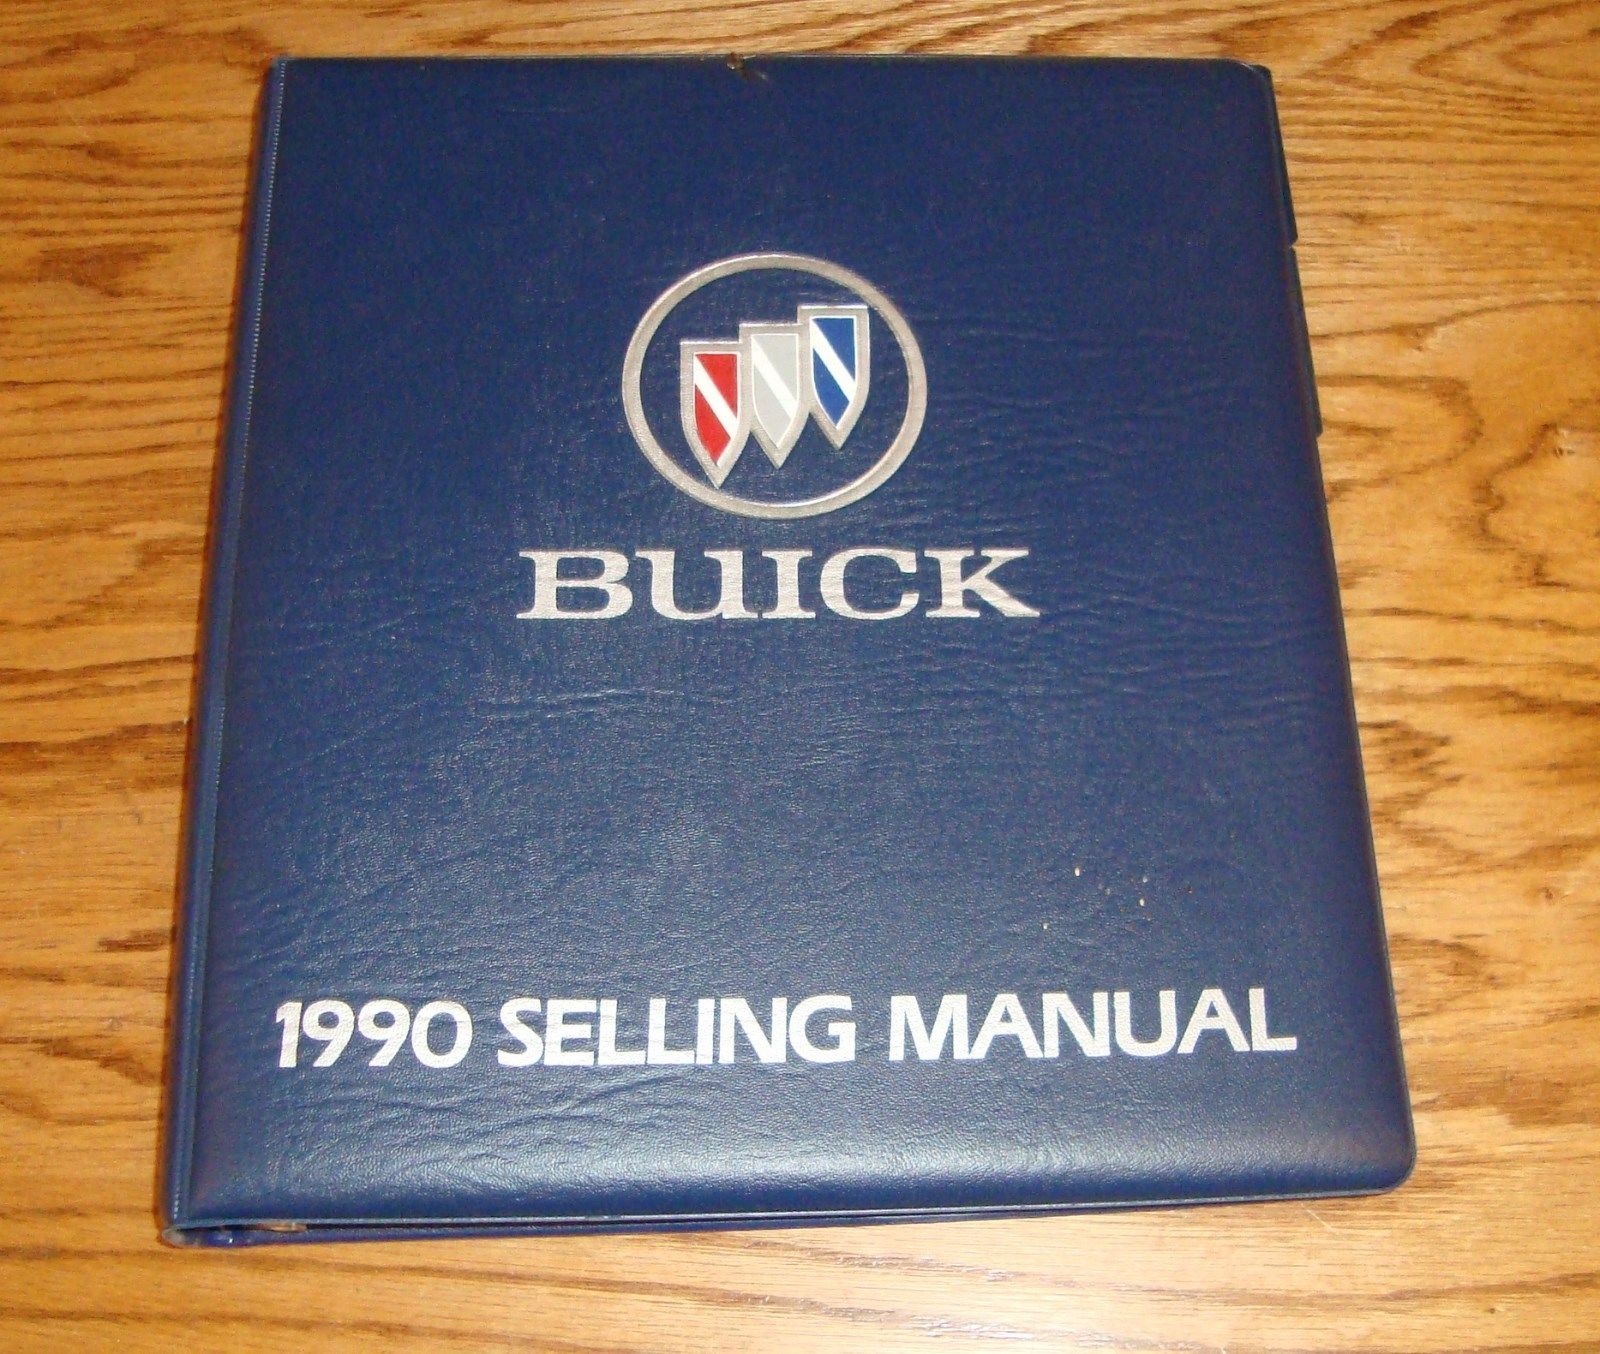 1989 & 1990 Buick Selling Manual